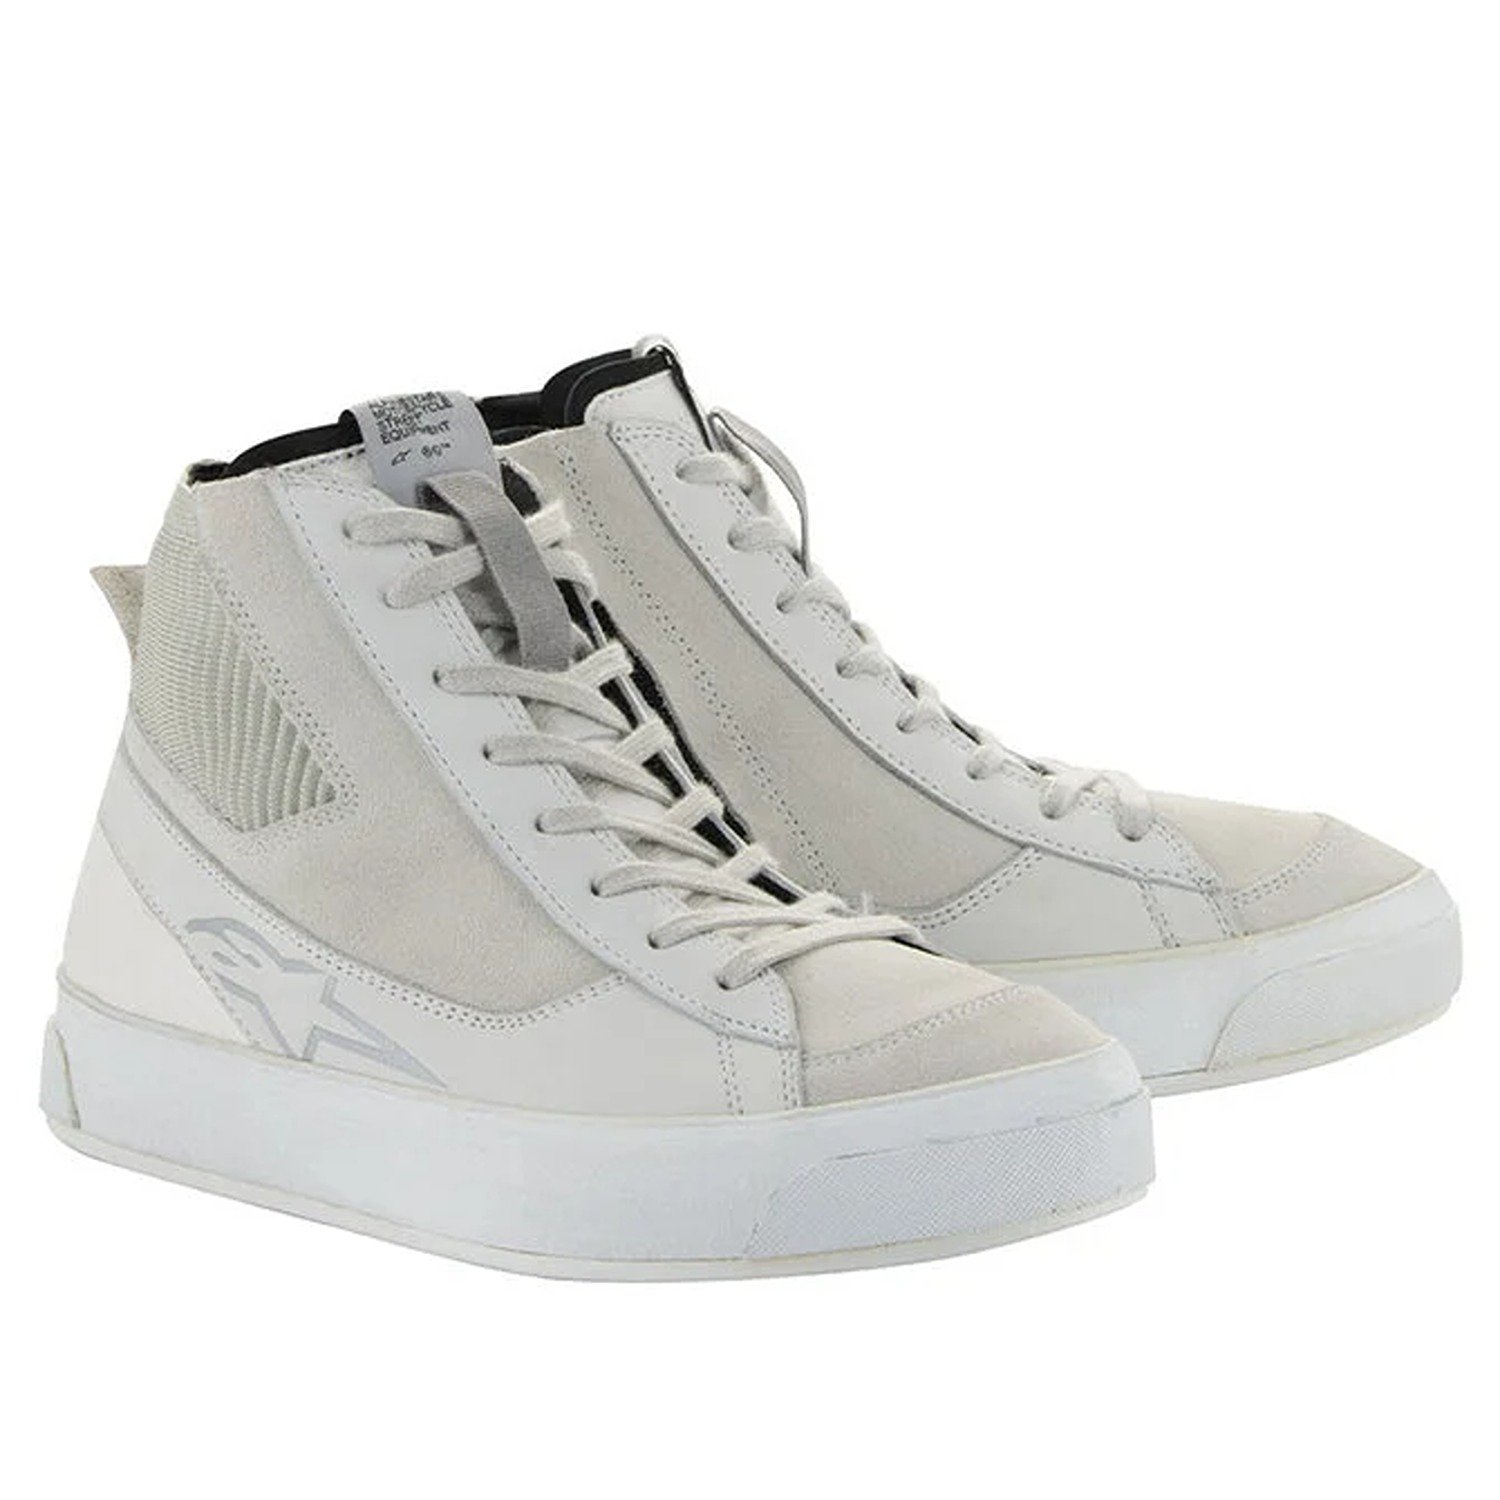 Image of Alpinestars Stella Stated Podium Shoes White Cool Gray Size US 11 EN